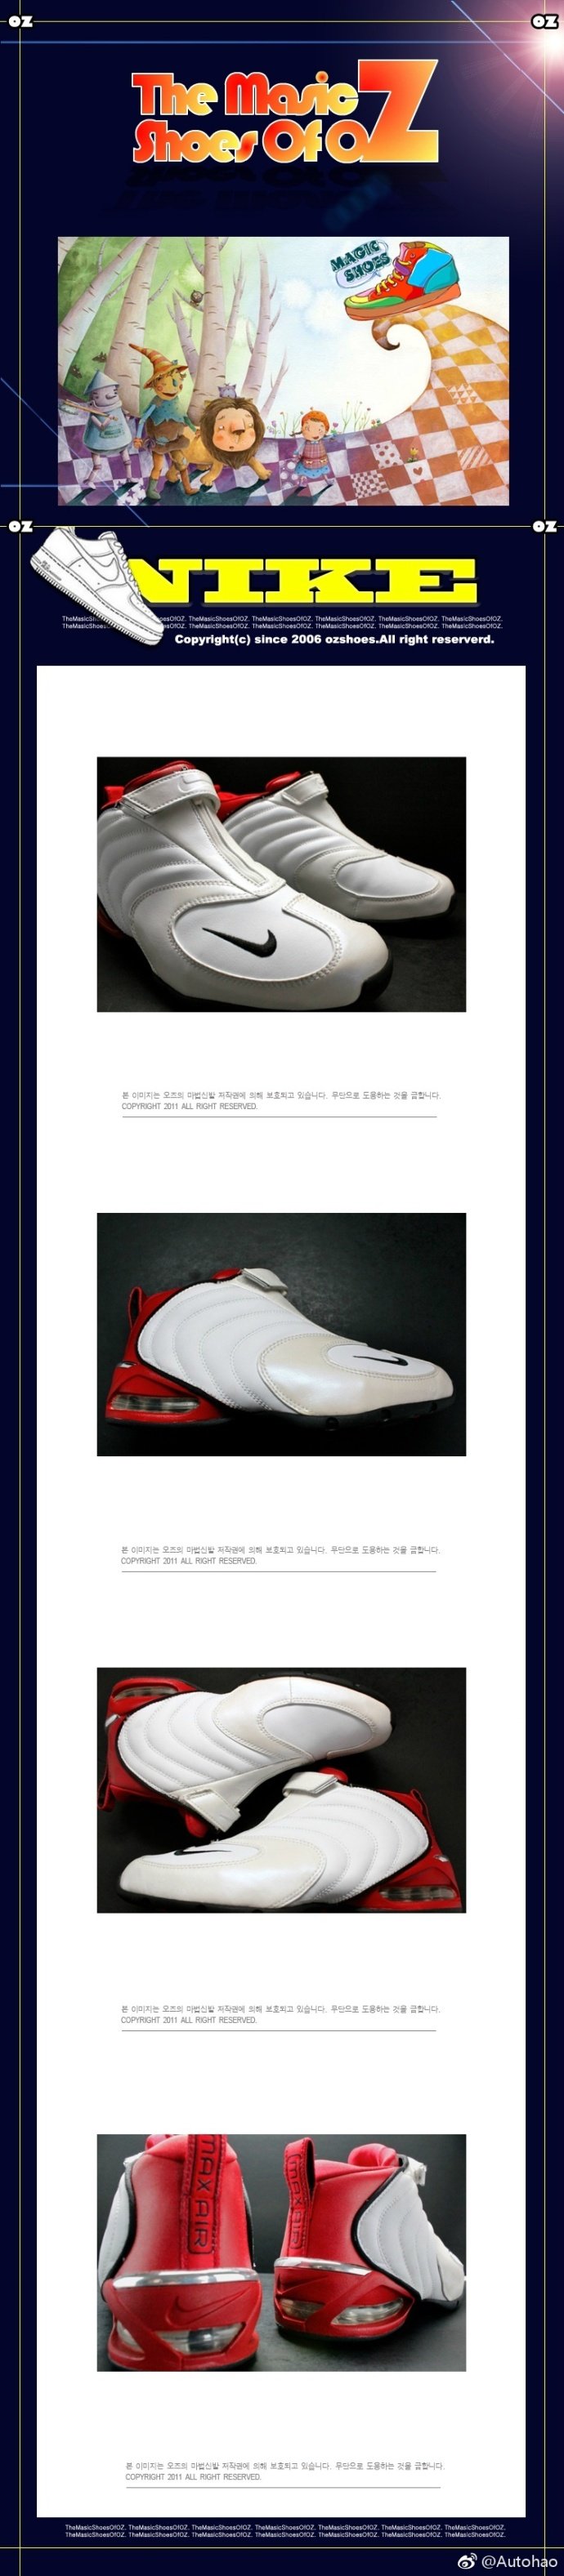 Nike Air Max Future Nilke BB4 PE|刘炜|姚明_新浪新闻